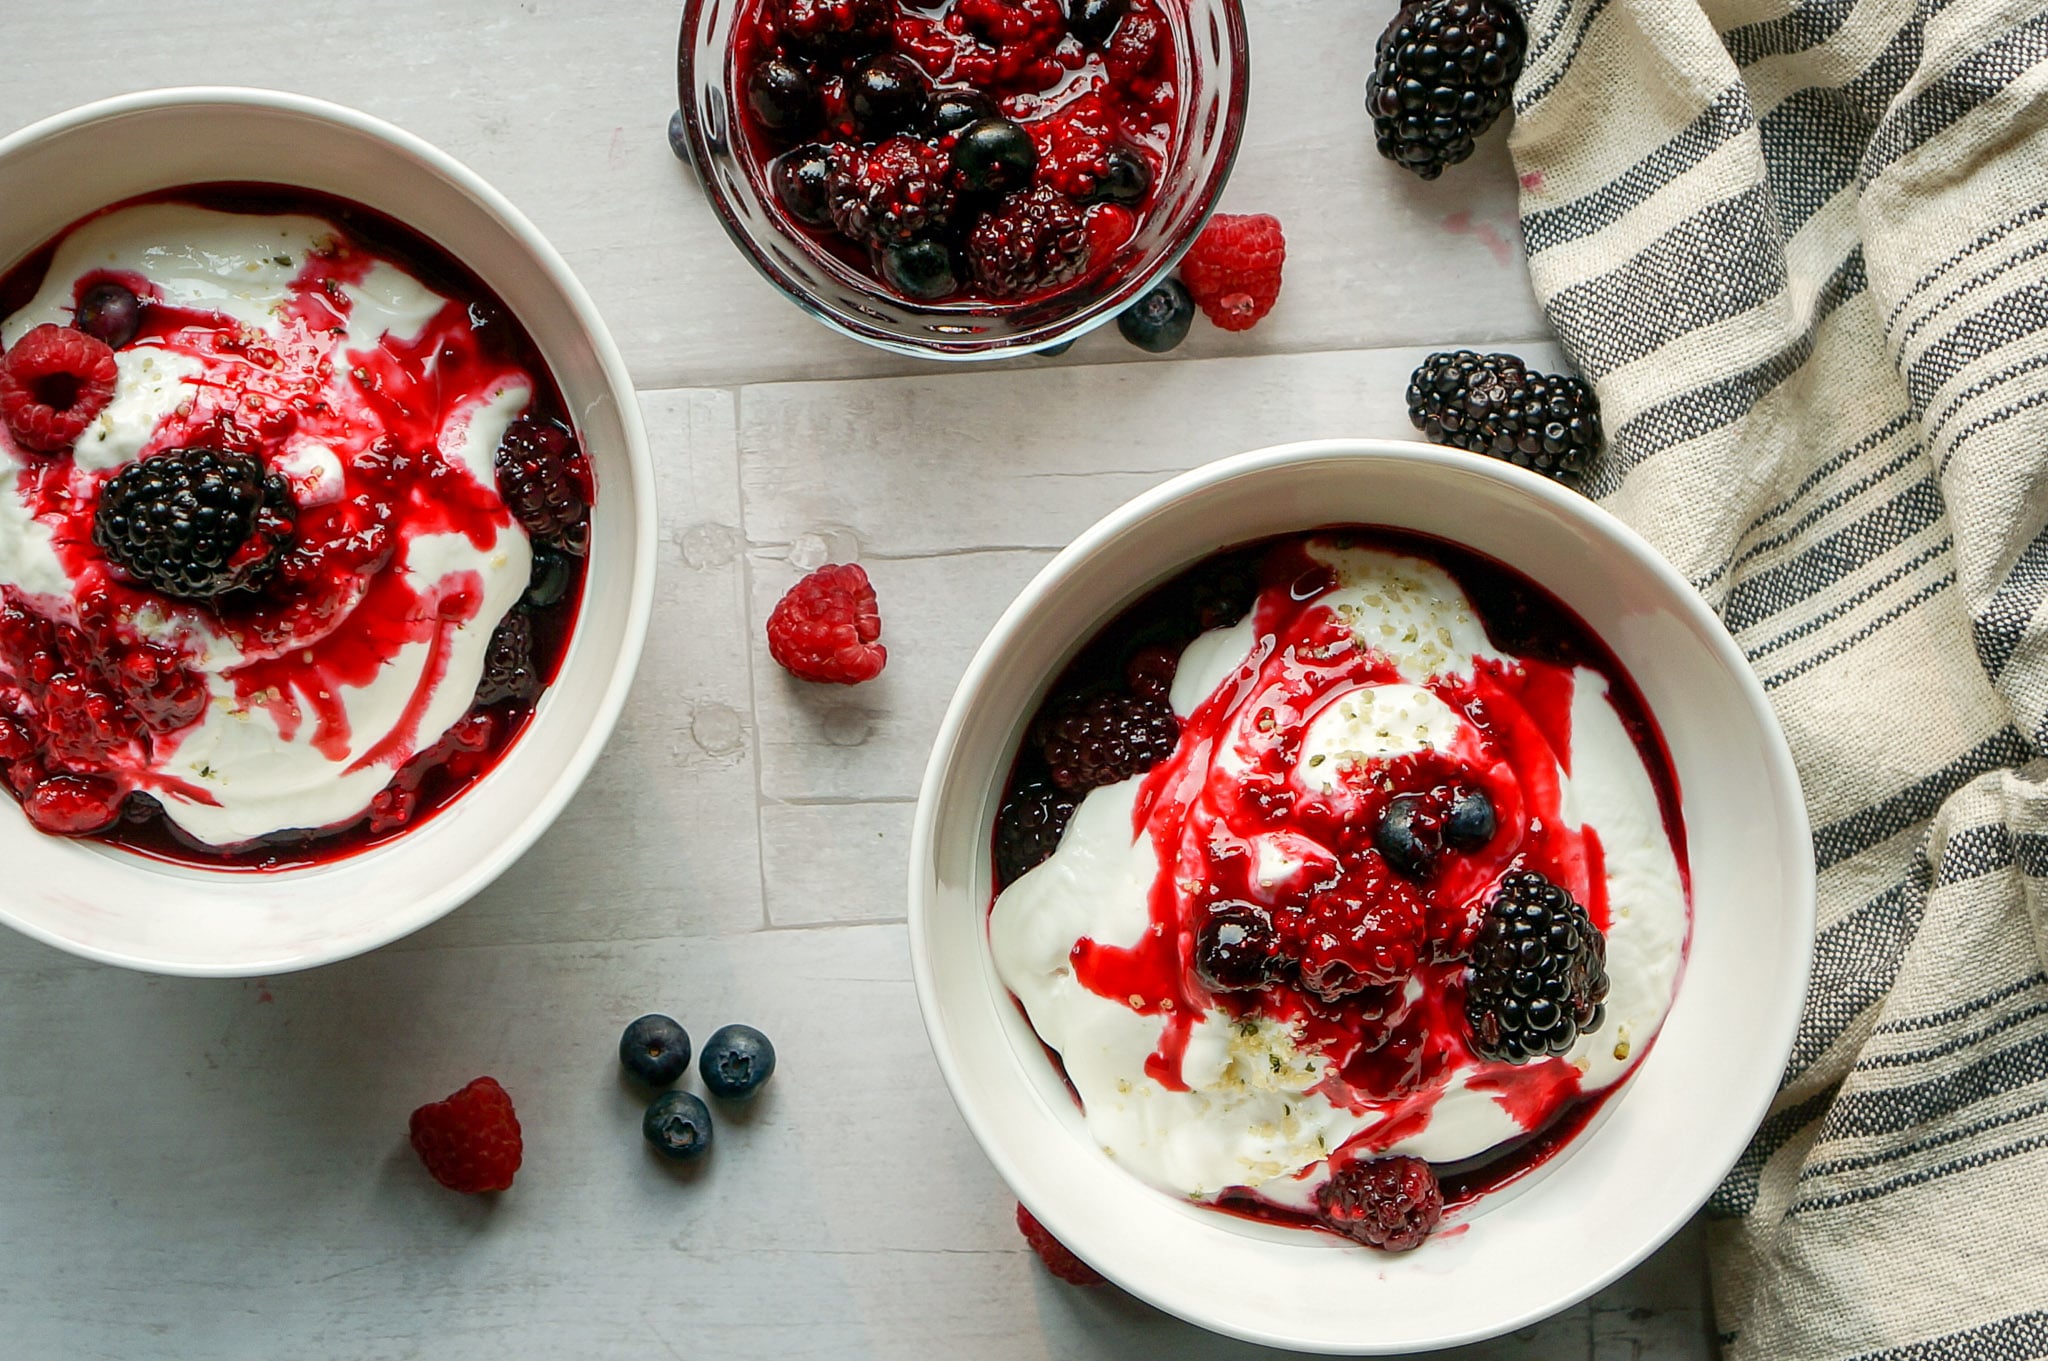 https://healthywithachanceofsprinkles.com/wp-content/uploads/2021/09/Breakfast-without-Eggs-Greek-Yogurt-Berries-High-Protein-Breakfast.jpg